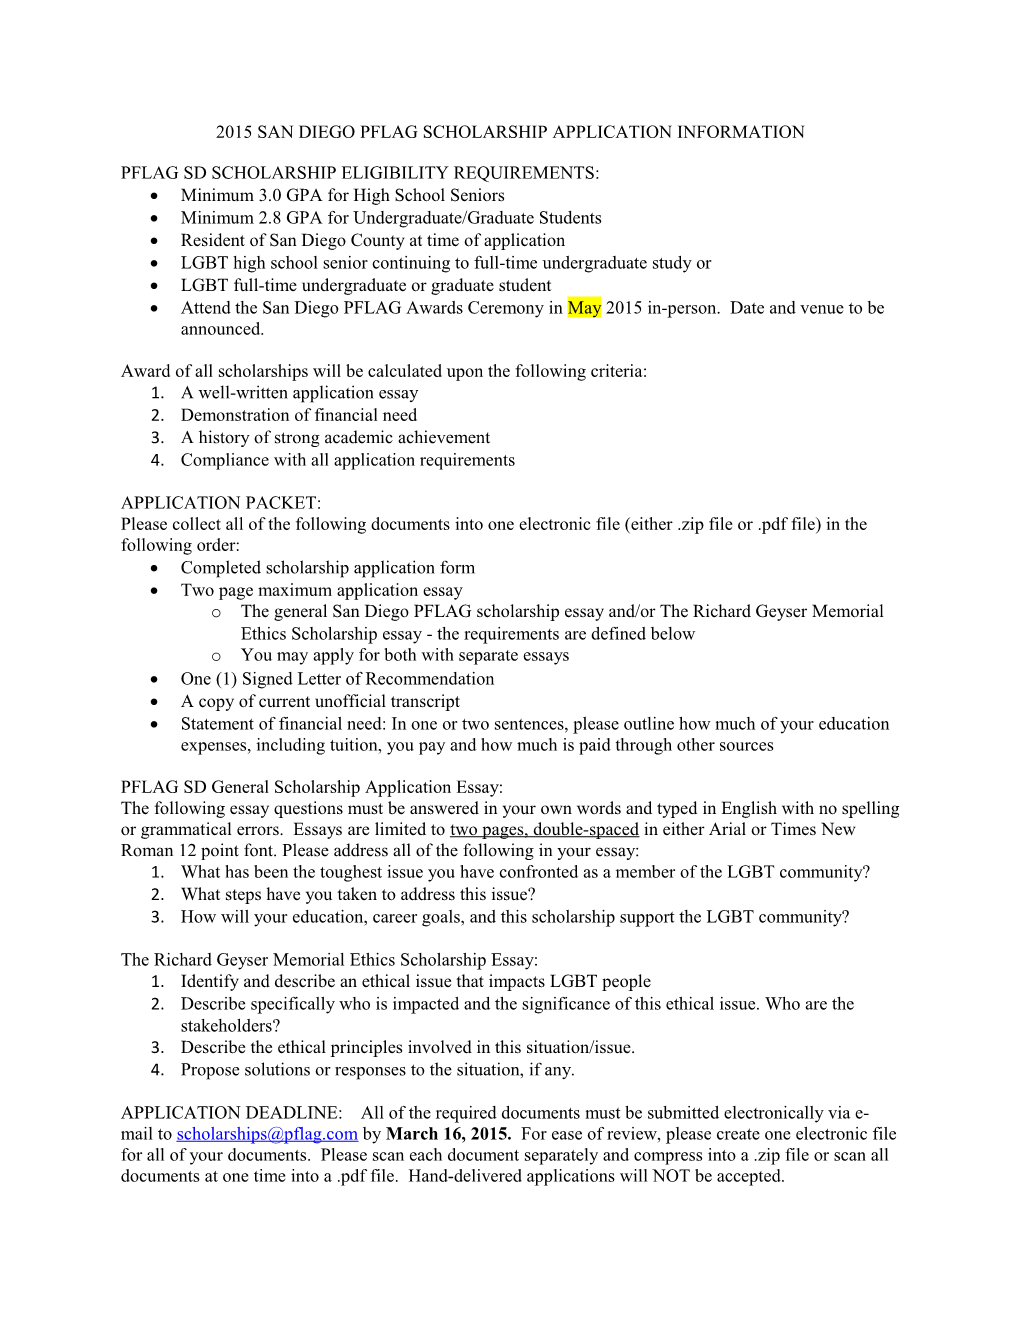 2015 San Diego Pflag Scholarship Application Information